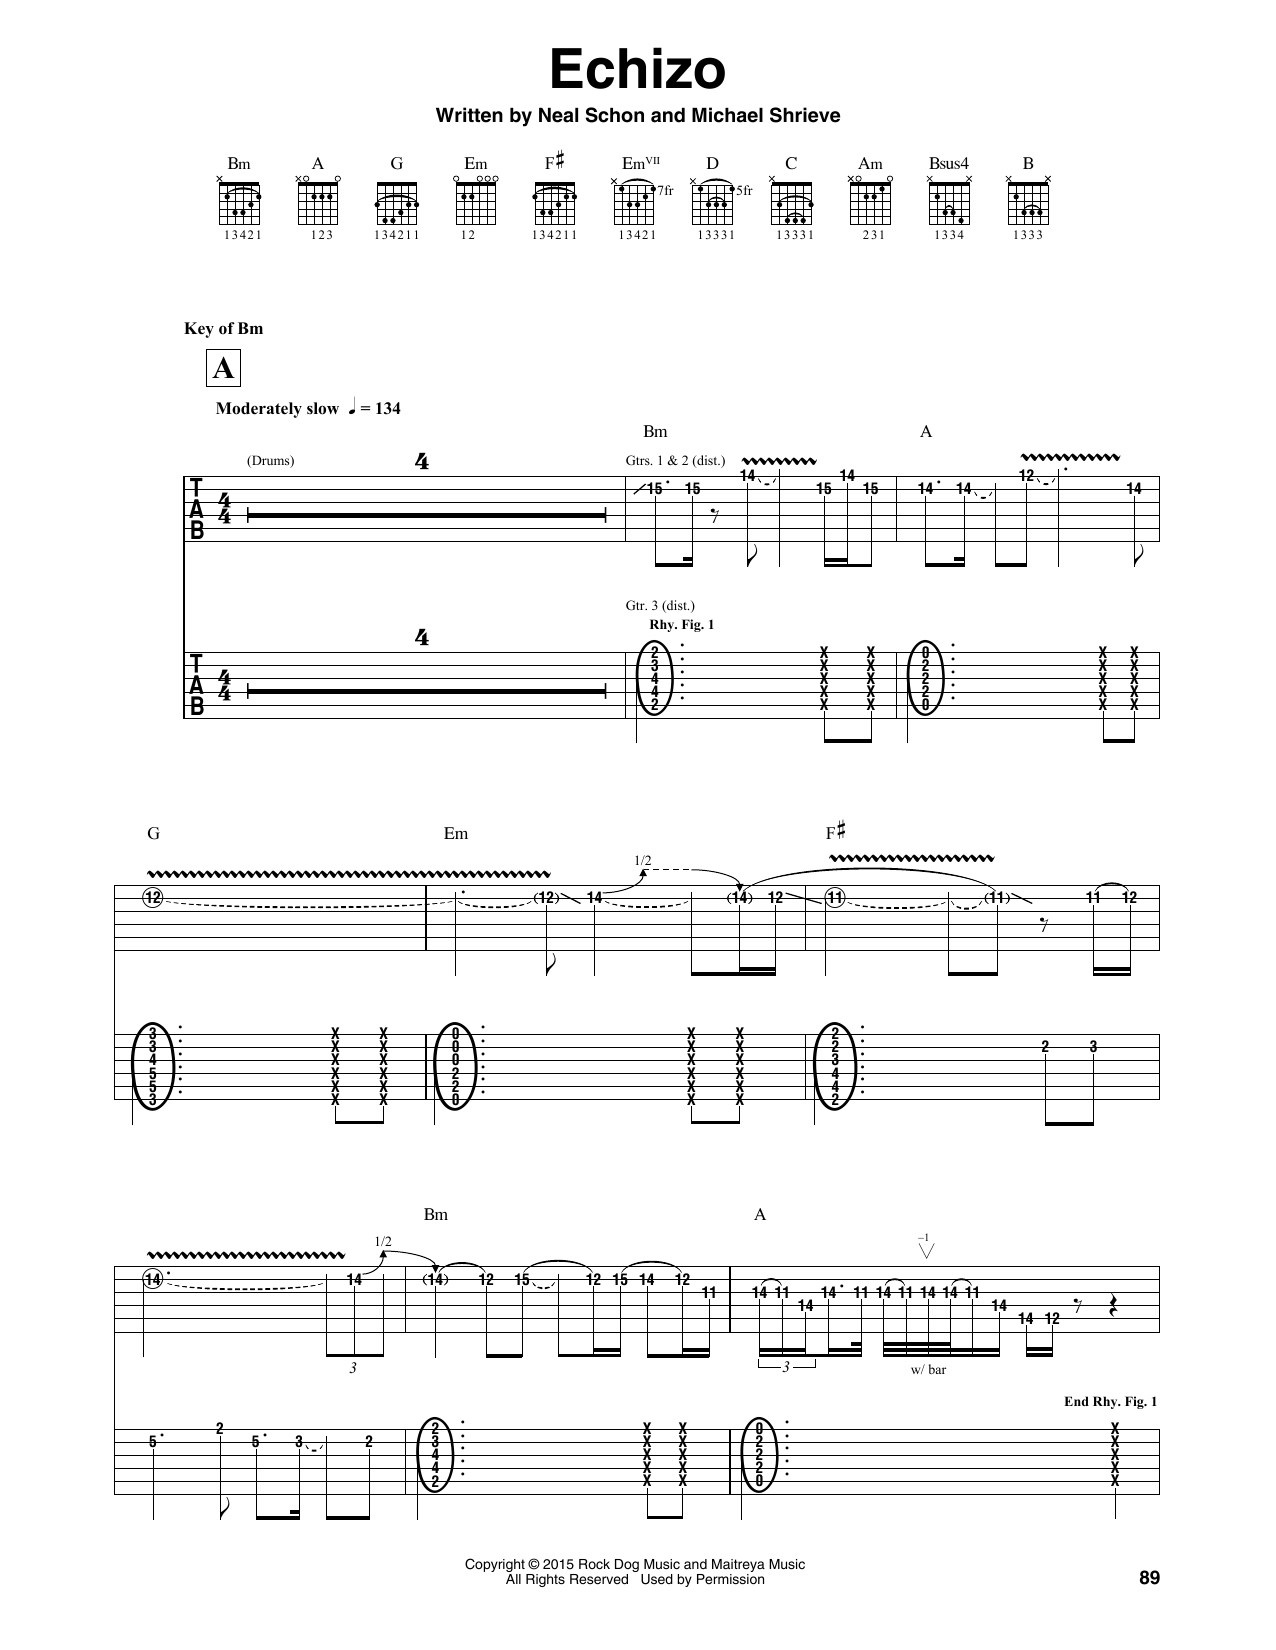 Santana Echizo Sheet Music Notes & Chords for Guitar Tab - Download or Print PDF